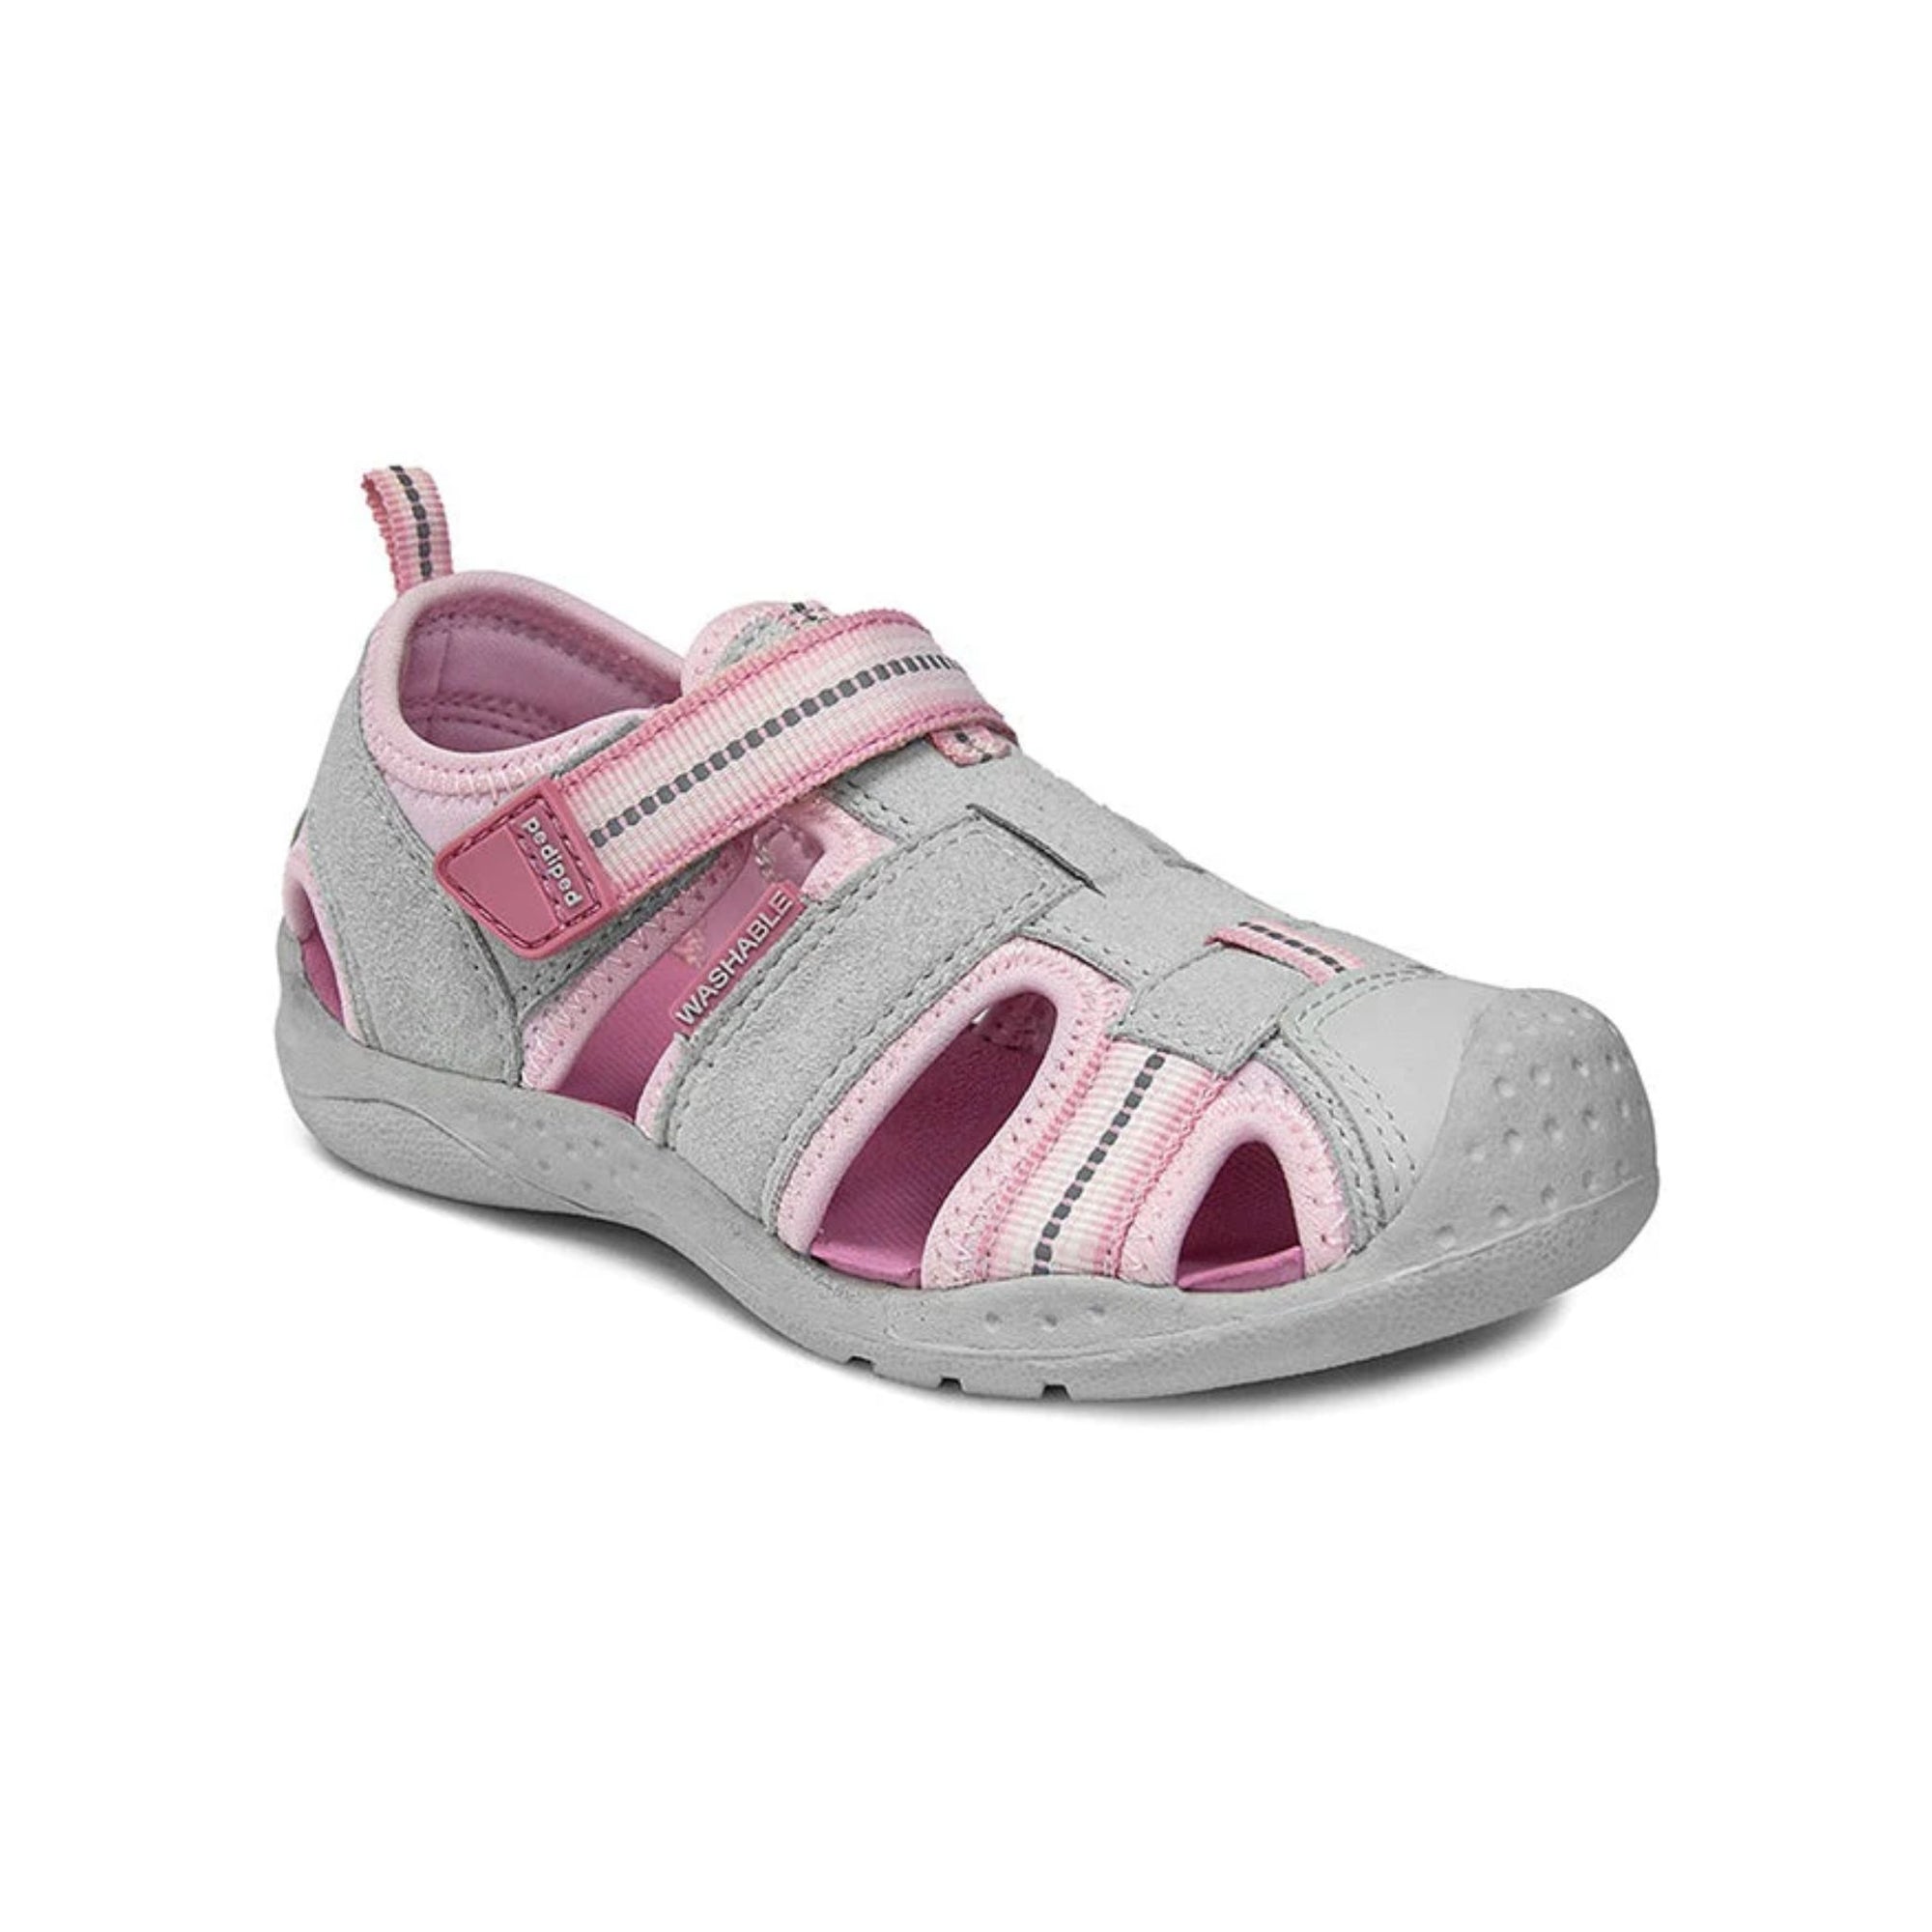 Pediped Flex Sahara Pink Cloud Adventure Sandals